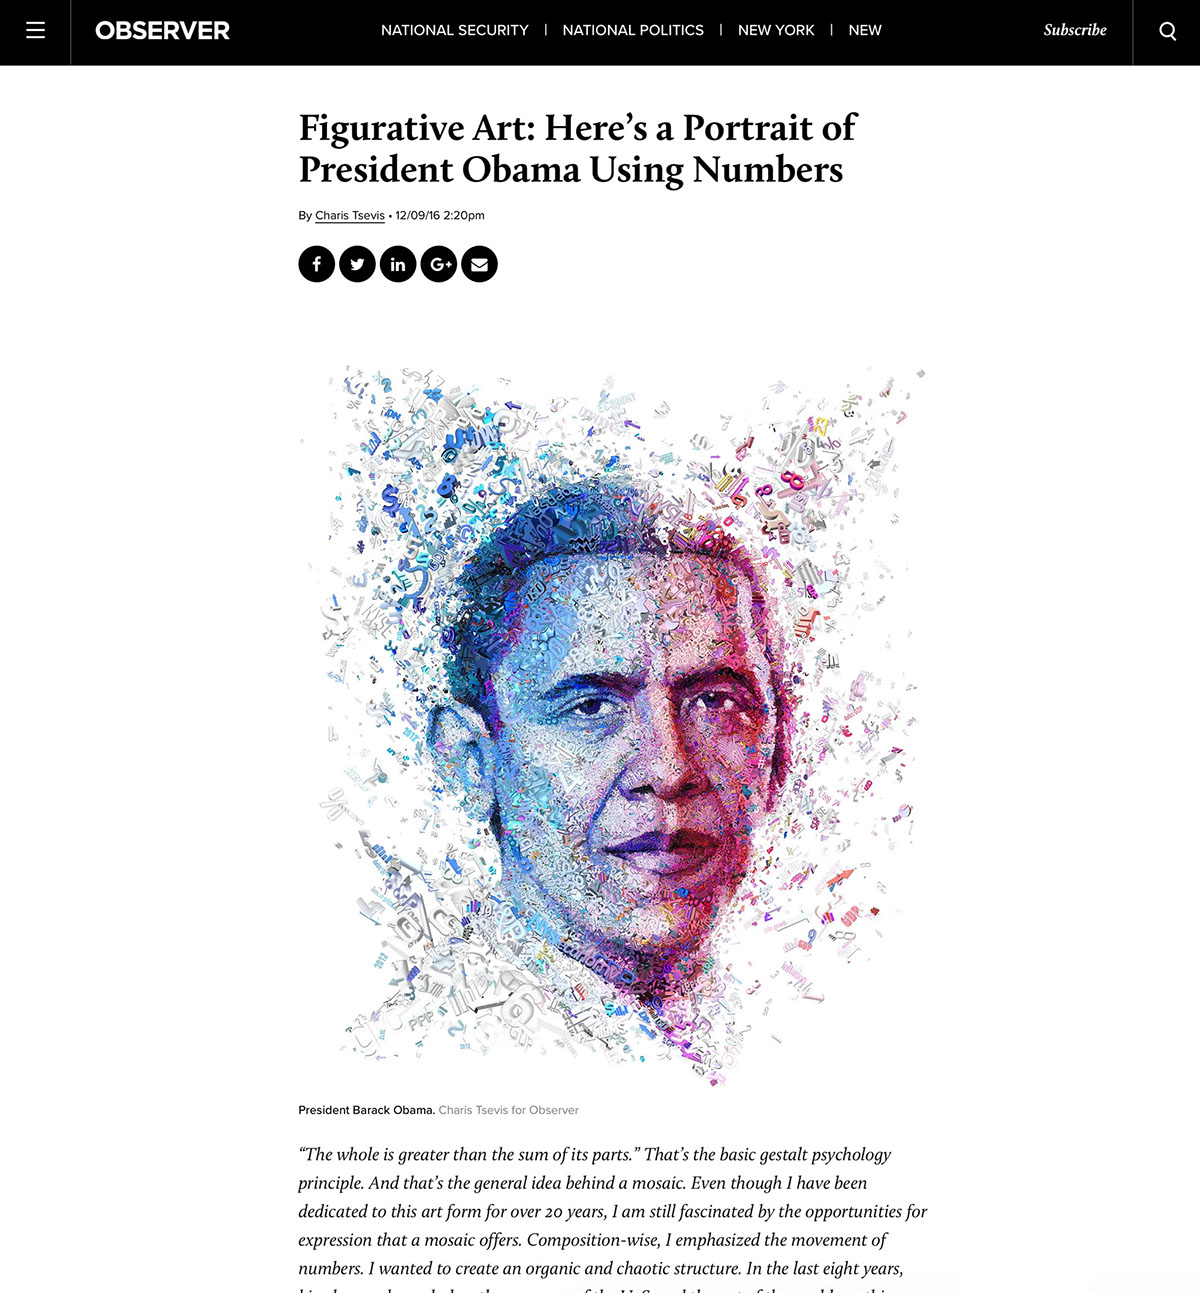 mosaic photomosaic collage computer graphics portrait journalism   politics publication editorial sports